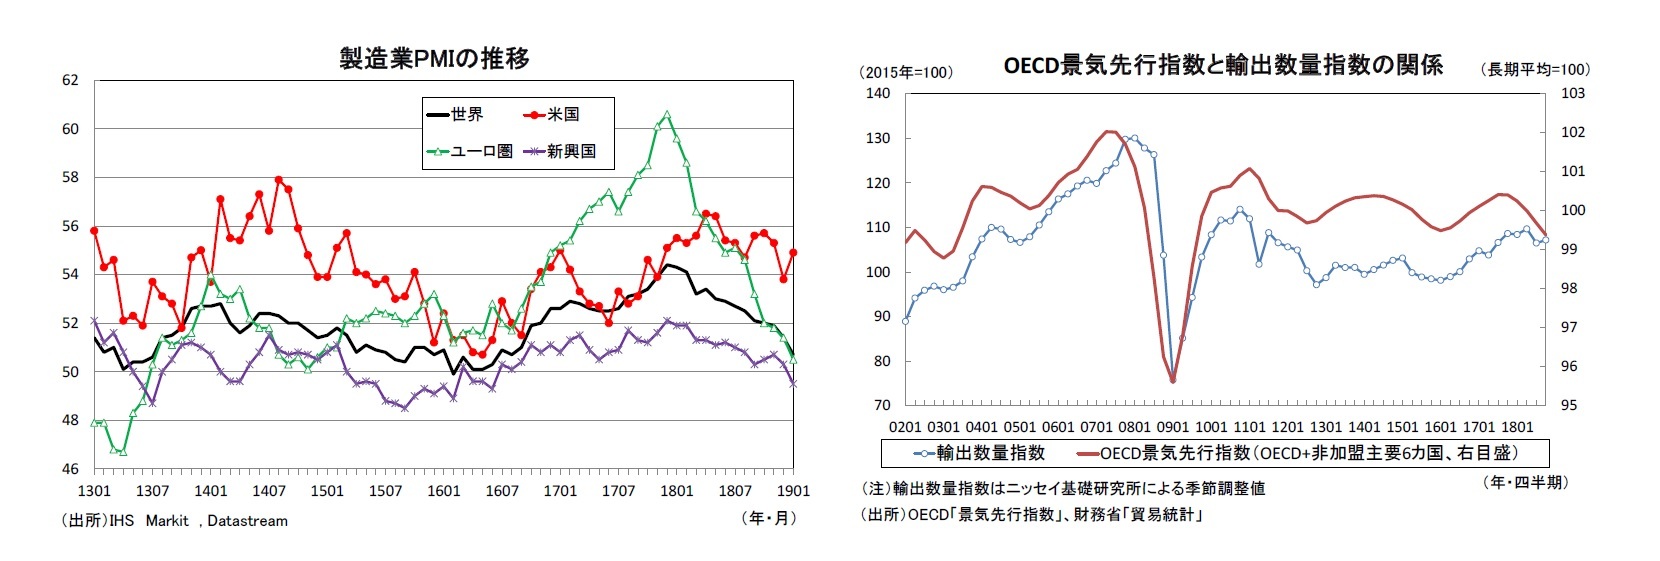 製造業PMIの推移/OECD景気先行指数と輸出数量指数の関係